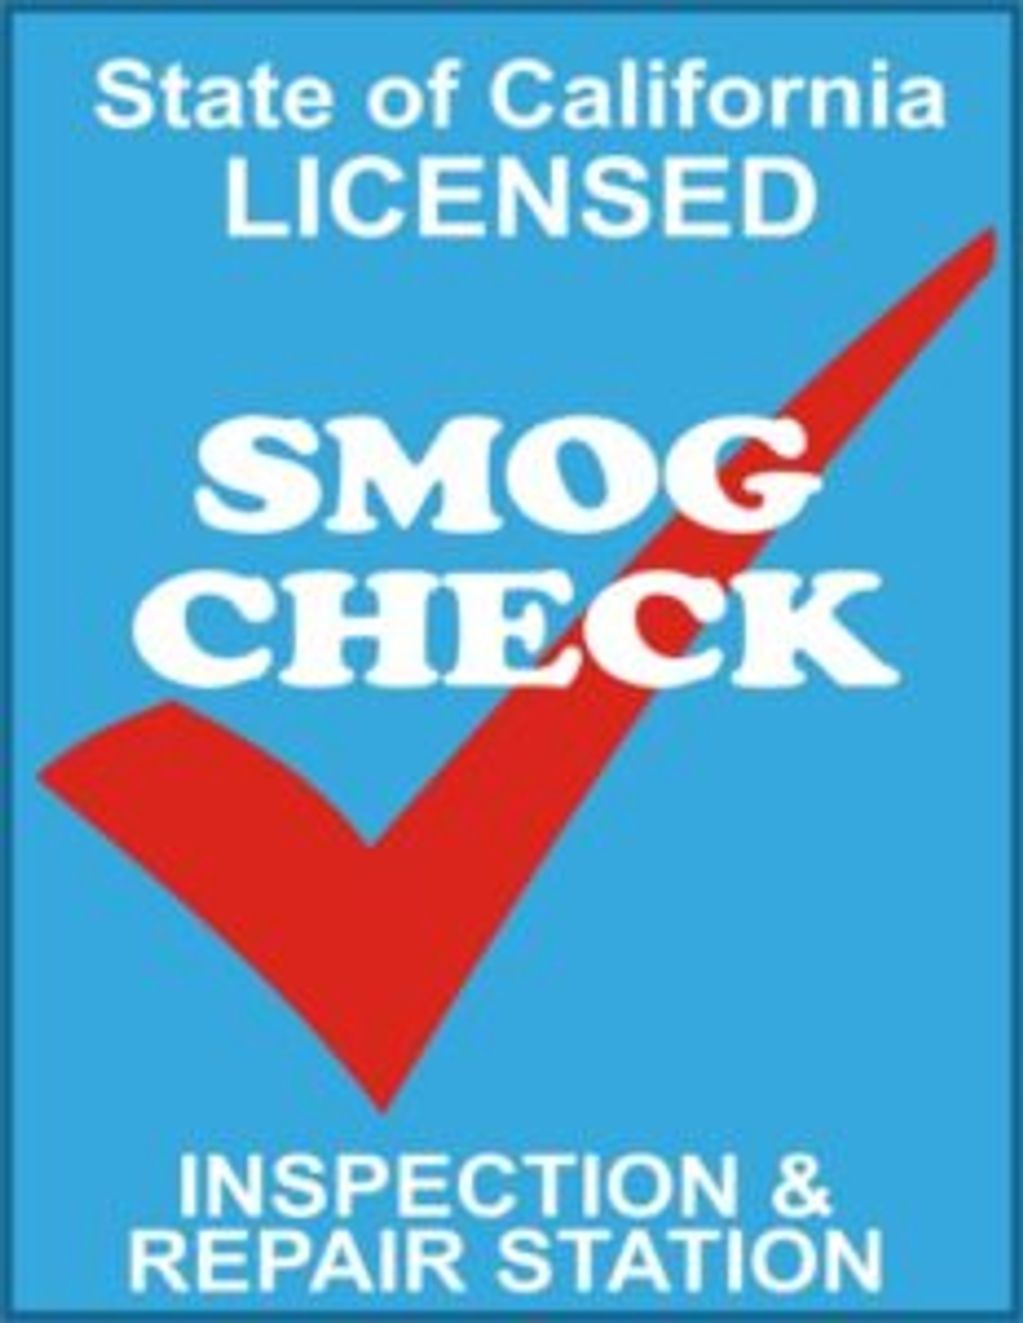 Smog check, Smog inspection, Certified, Professional, Engine light, misfire, Auto repair.